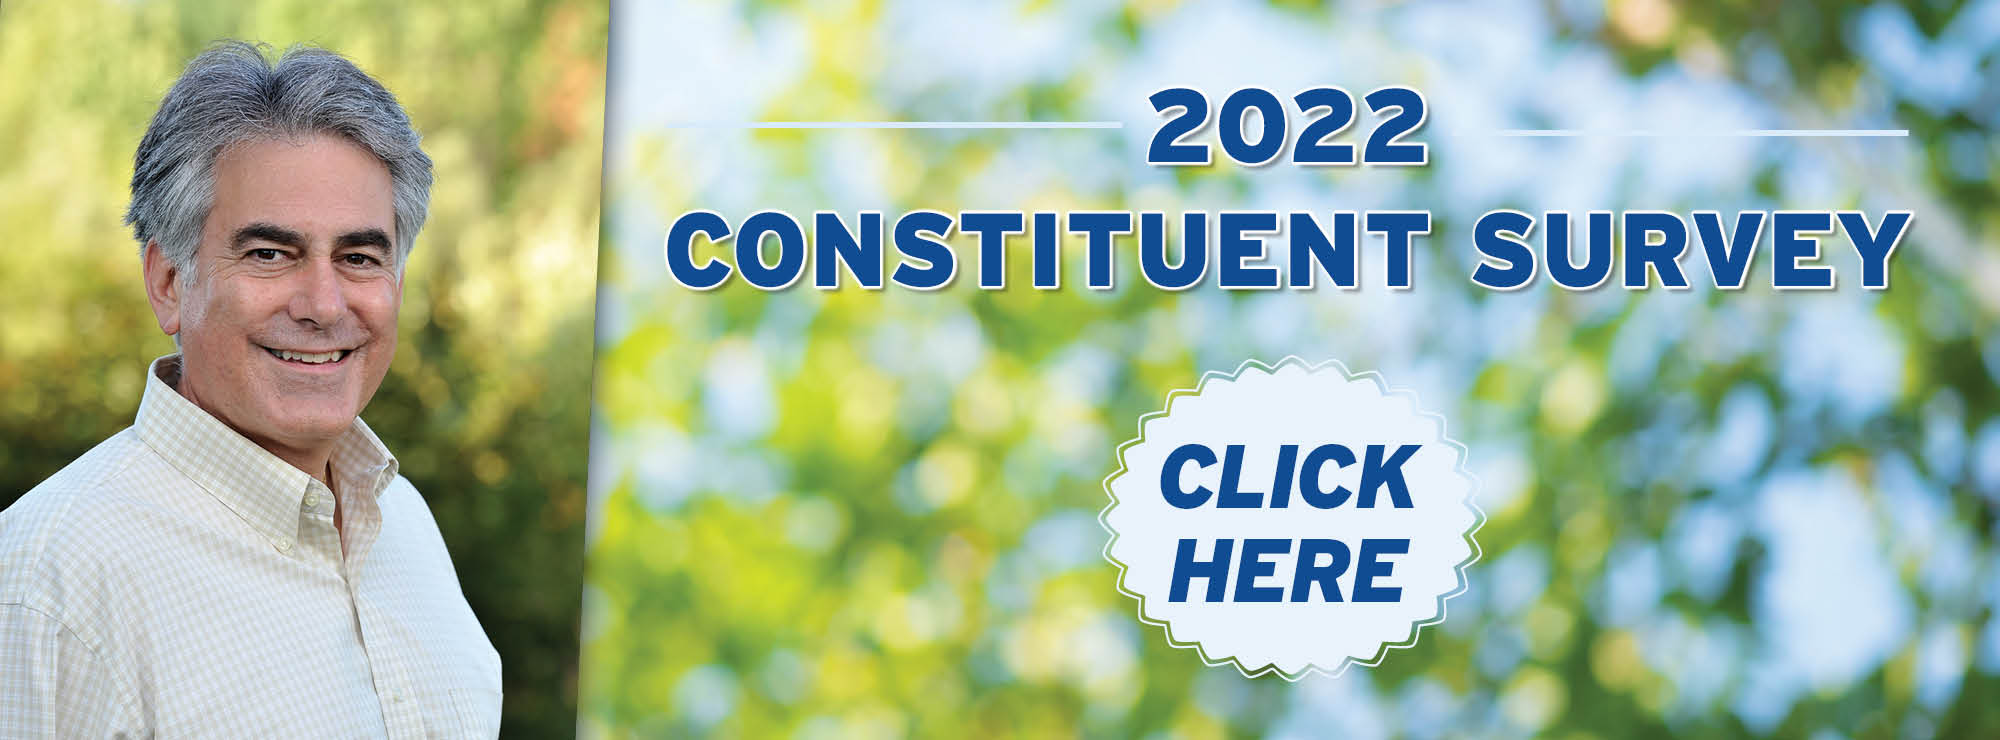 2022 Constituent Survey